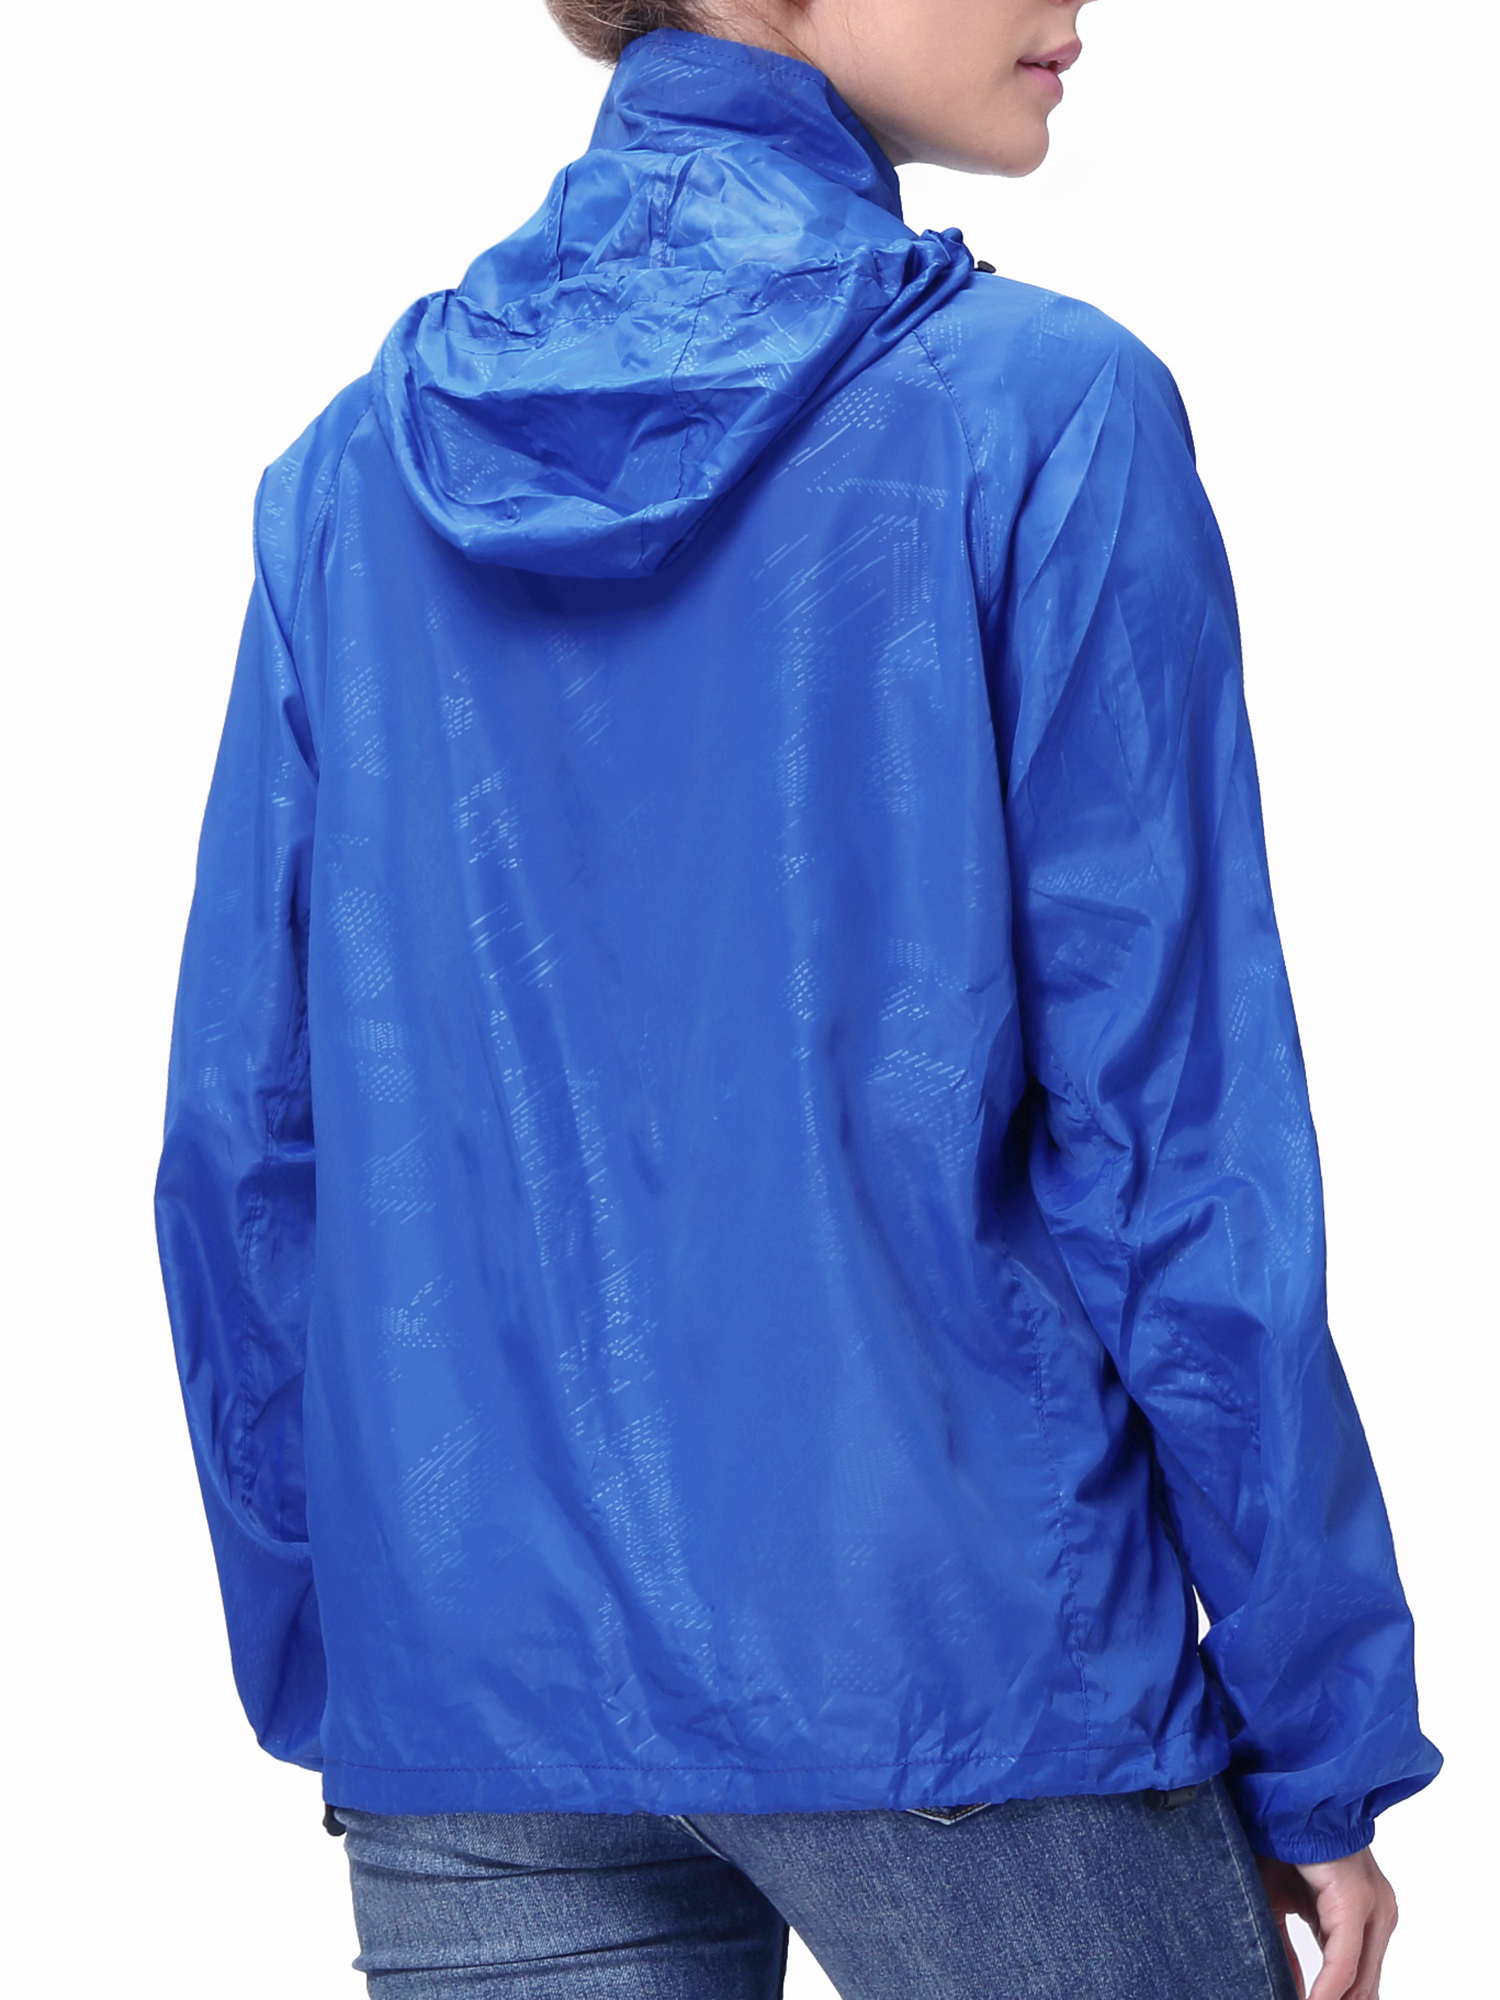 FOCUSSEXY Women's Hooded Rain Jacket Waterproof Windbreaker Hooded Rain Outdoor Poncho Running Jackets Womens Raincoat Packable Hooded Shirt Quick Dry - image 2 of 8